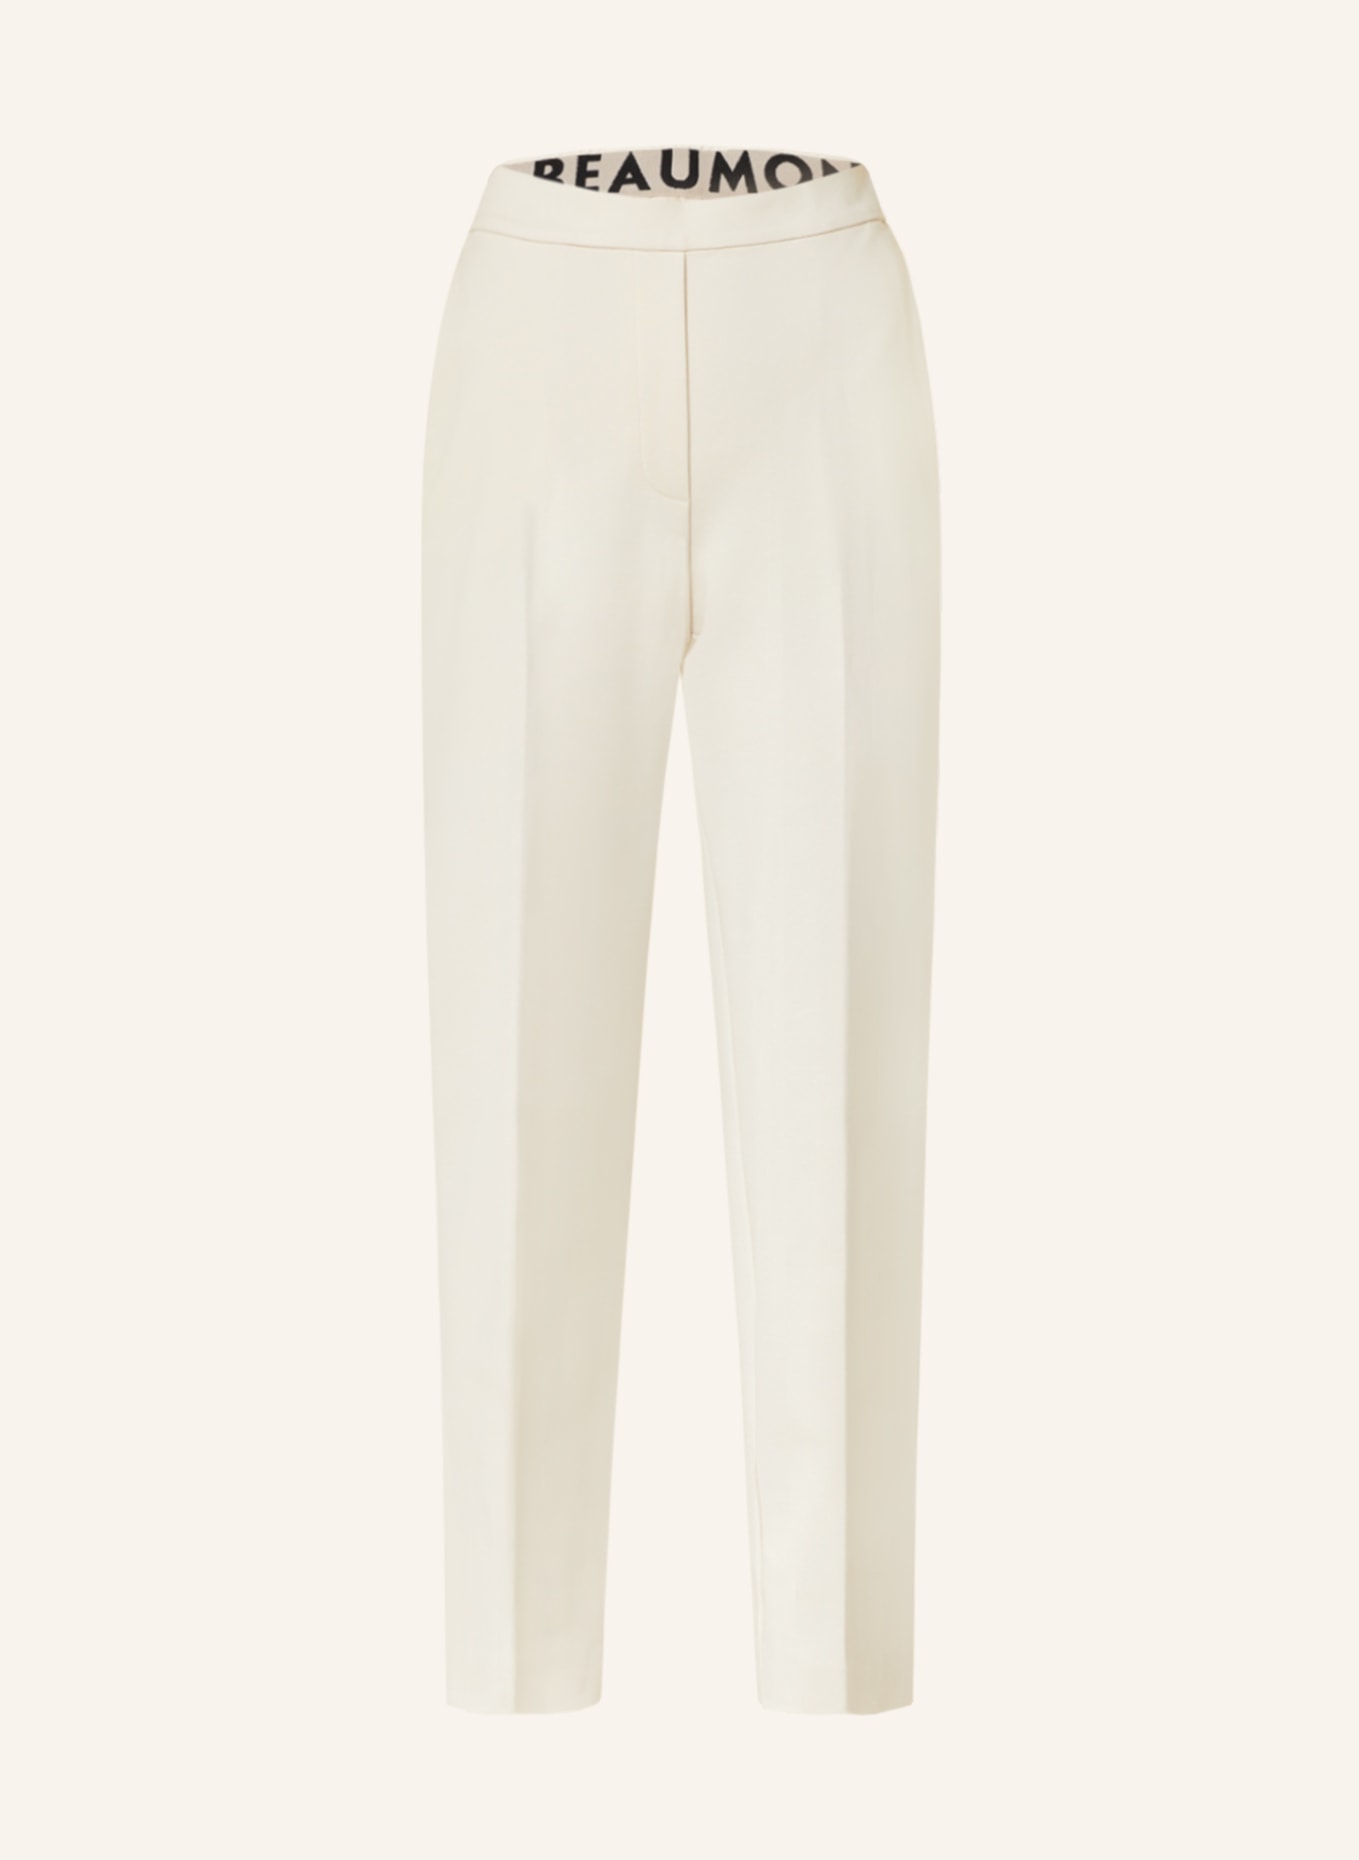 BEAUMONT Jersey pants CHARLIE, Color: CREAM (Image 1)